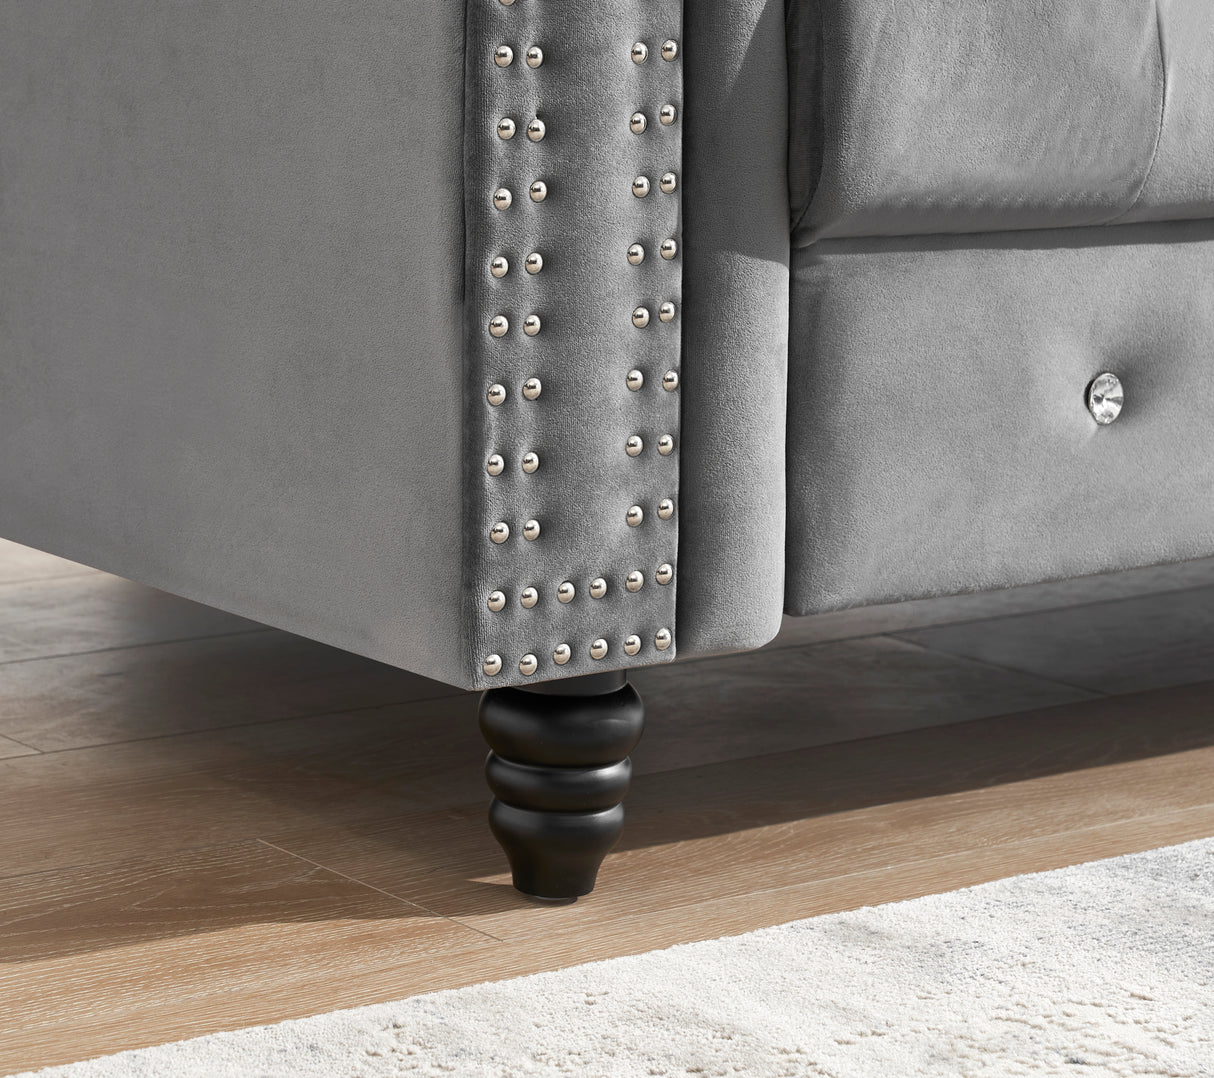 Grey Chesterfield Deep Button Velvet One-Seat Sofa Roll Arm Classic Sofa Home Elegance USA